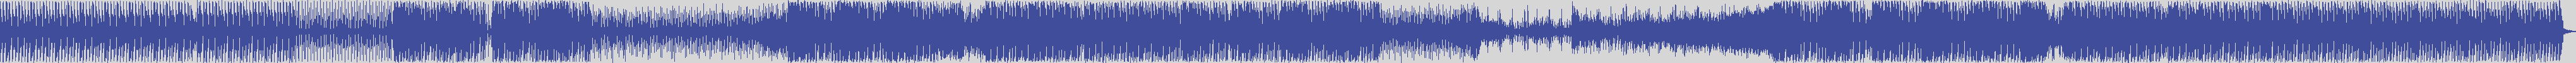 atomic_recordings [AR021] Ruben Mandolini - Melodica [Original Mix] audio wave form